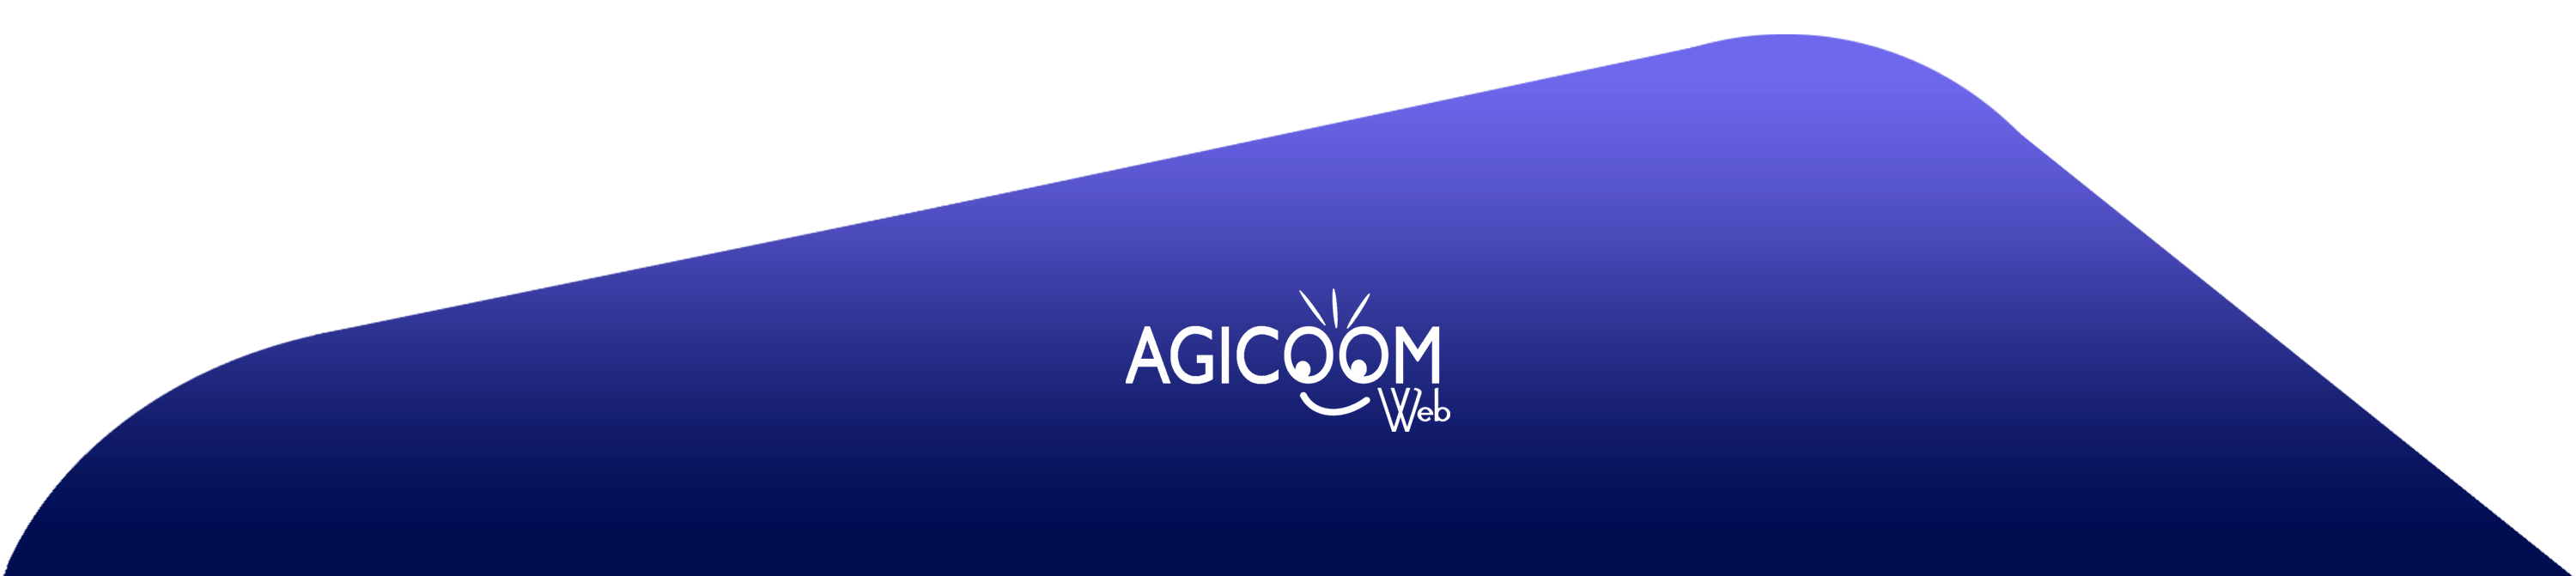 agicoom-web-sito-sicuro-gdpr-footer